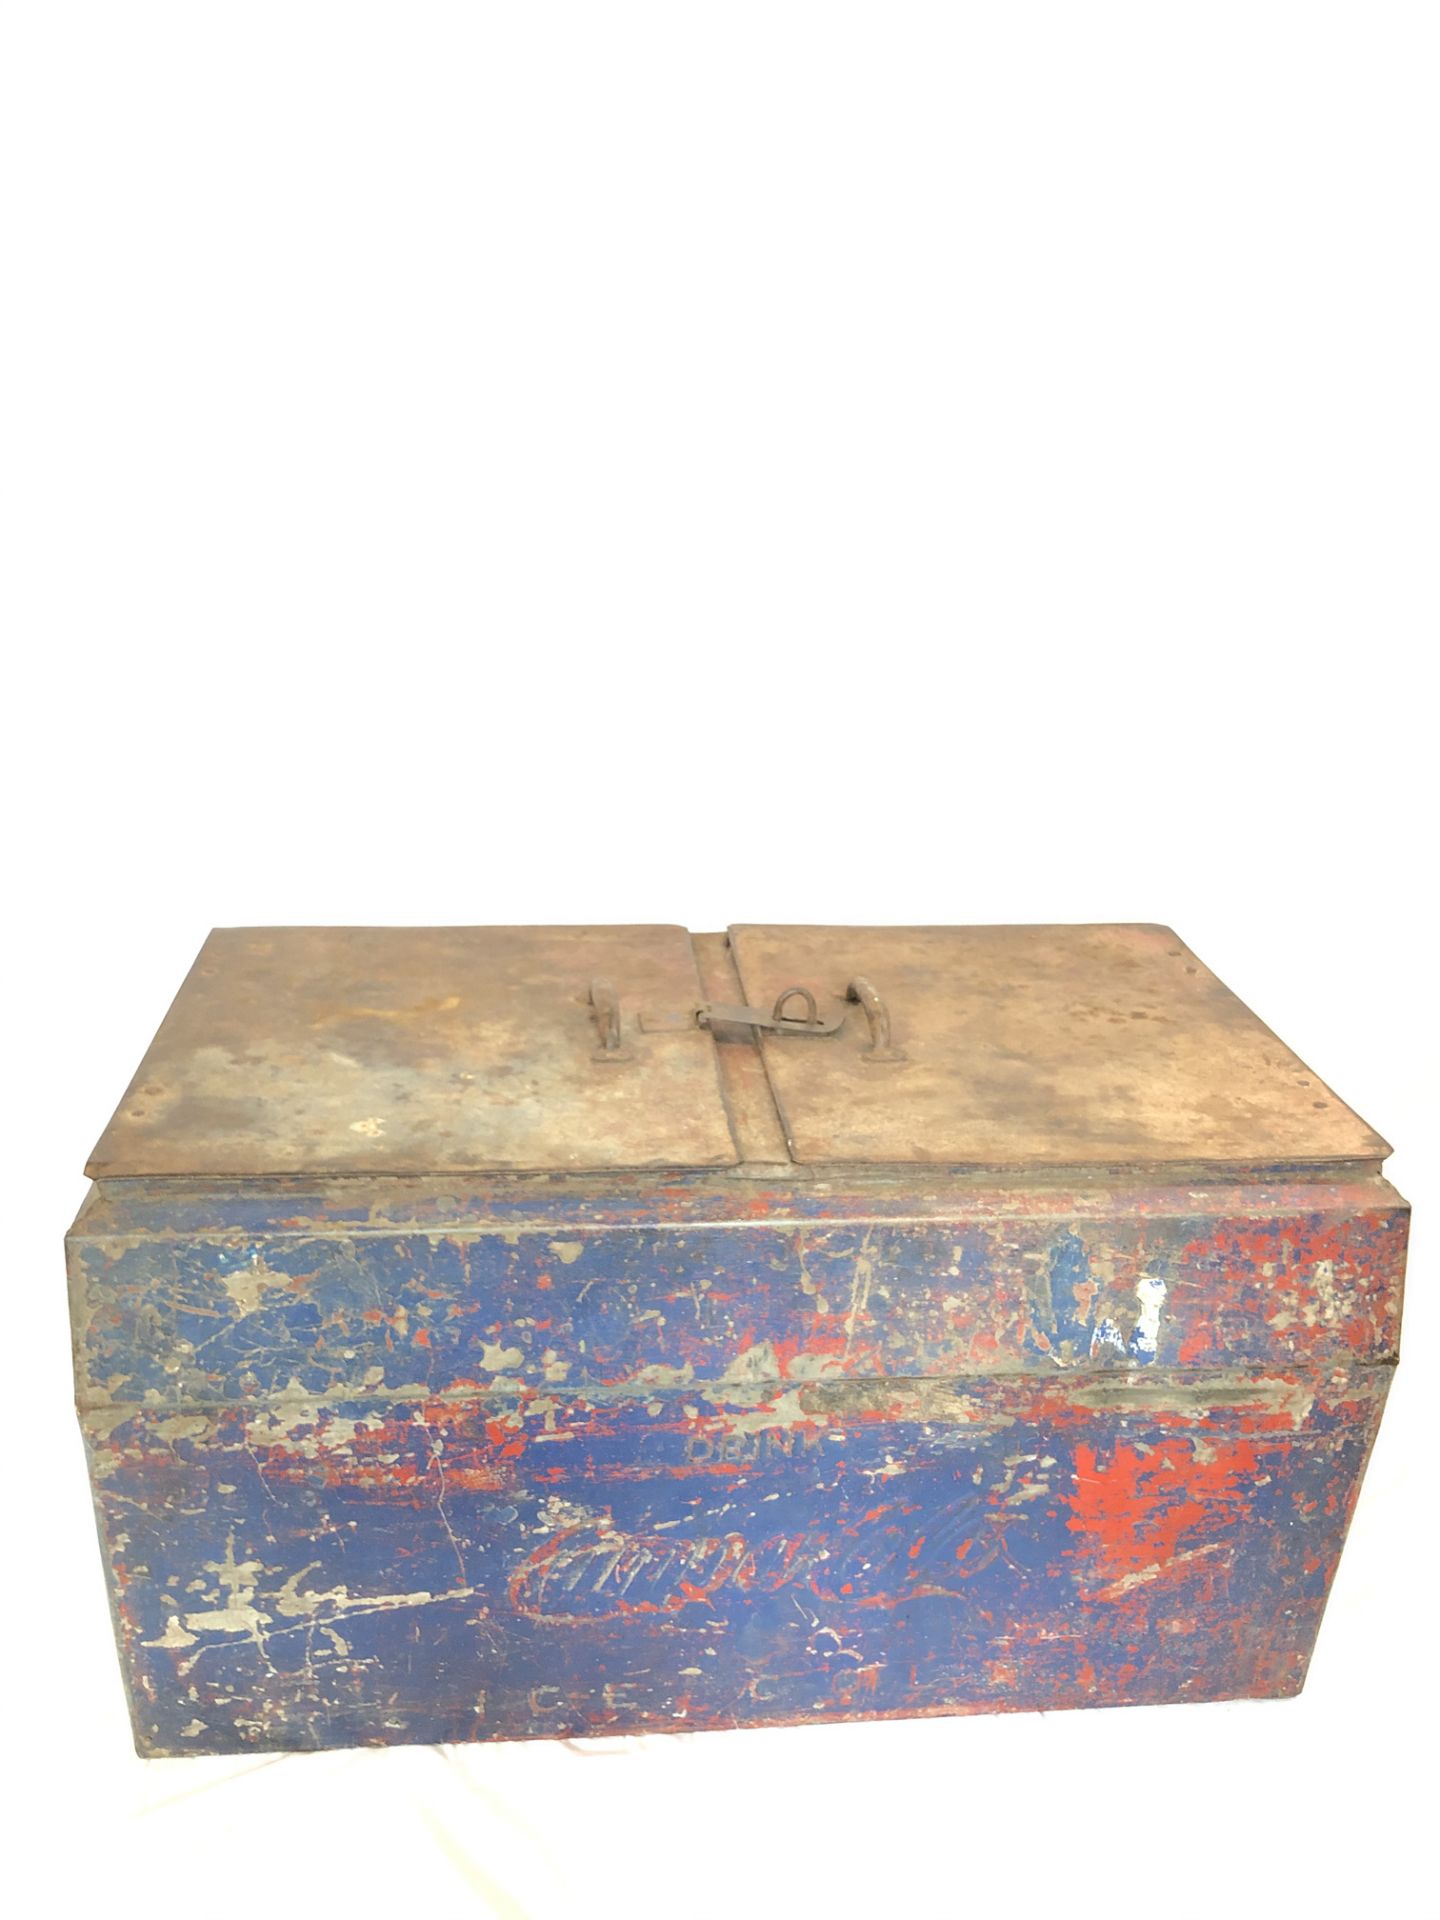 Vintage Campa Cola cooler box - Image 7 of 7